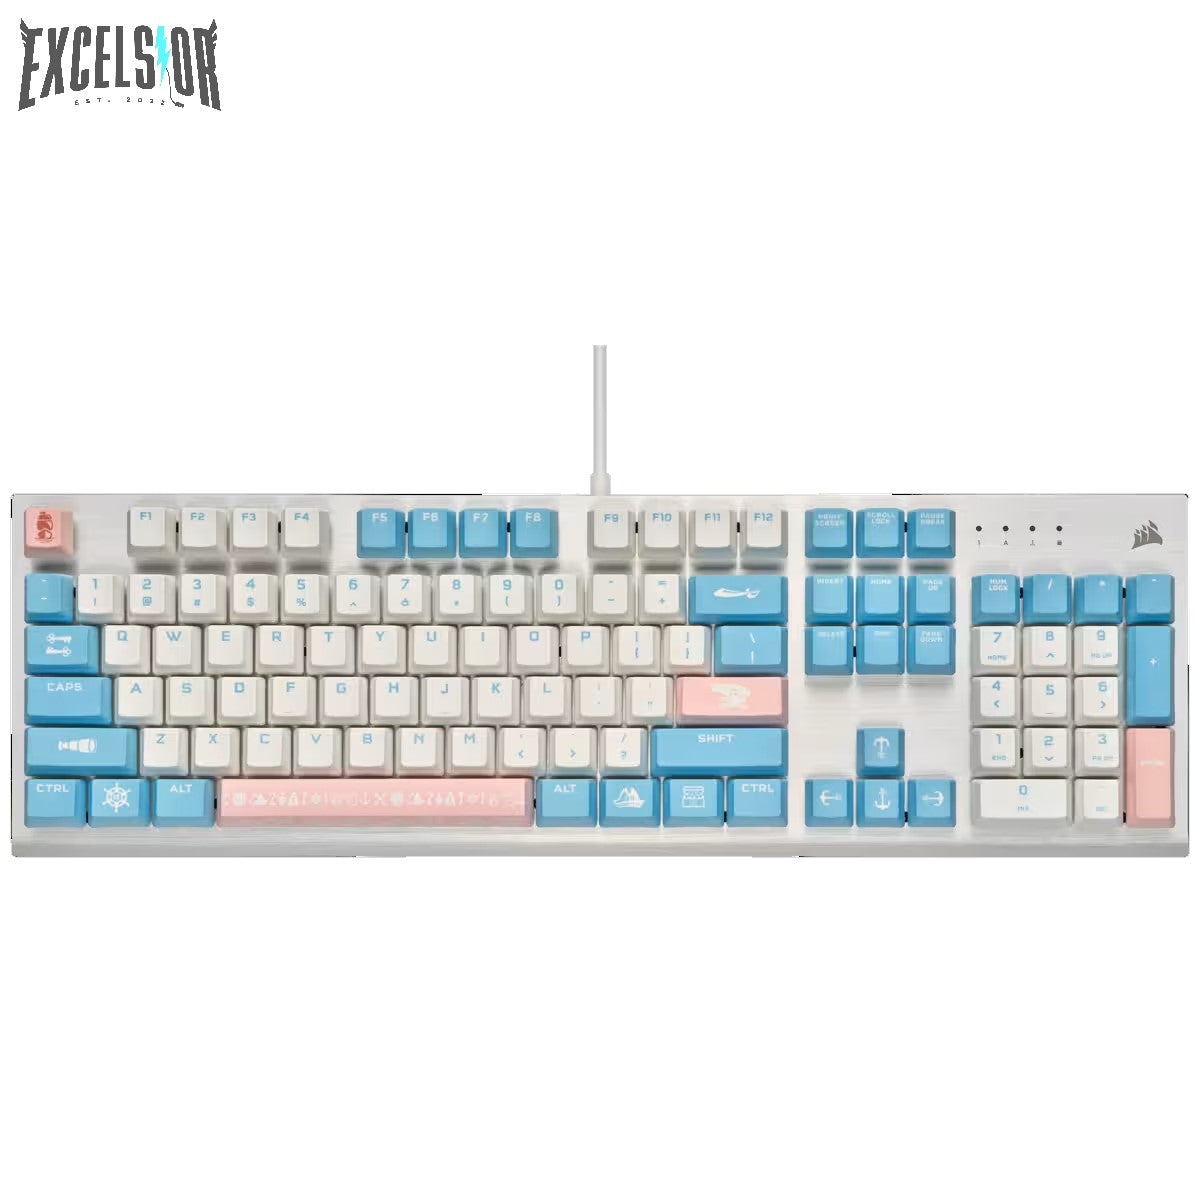 Corsair K60 RGB Pro Mechanical Gaming Keyboard - Sweet Sky